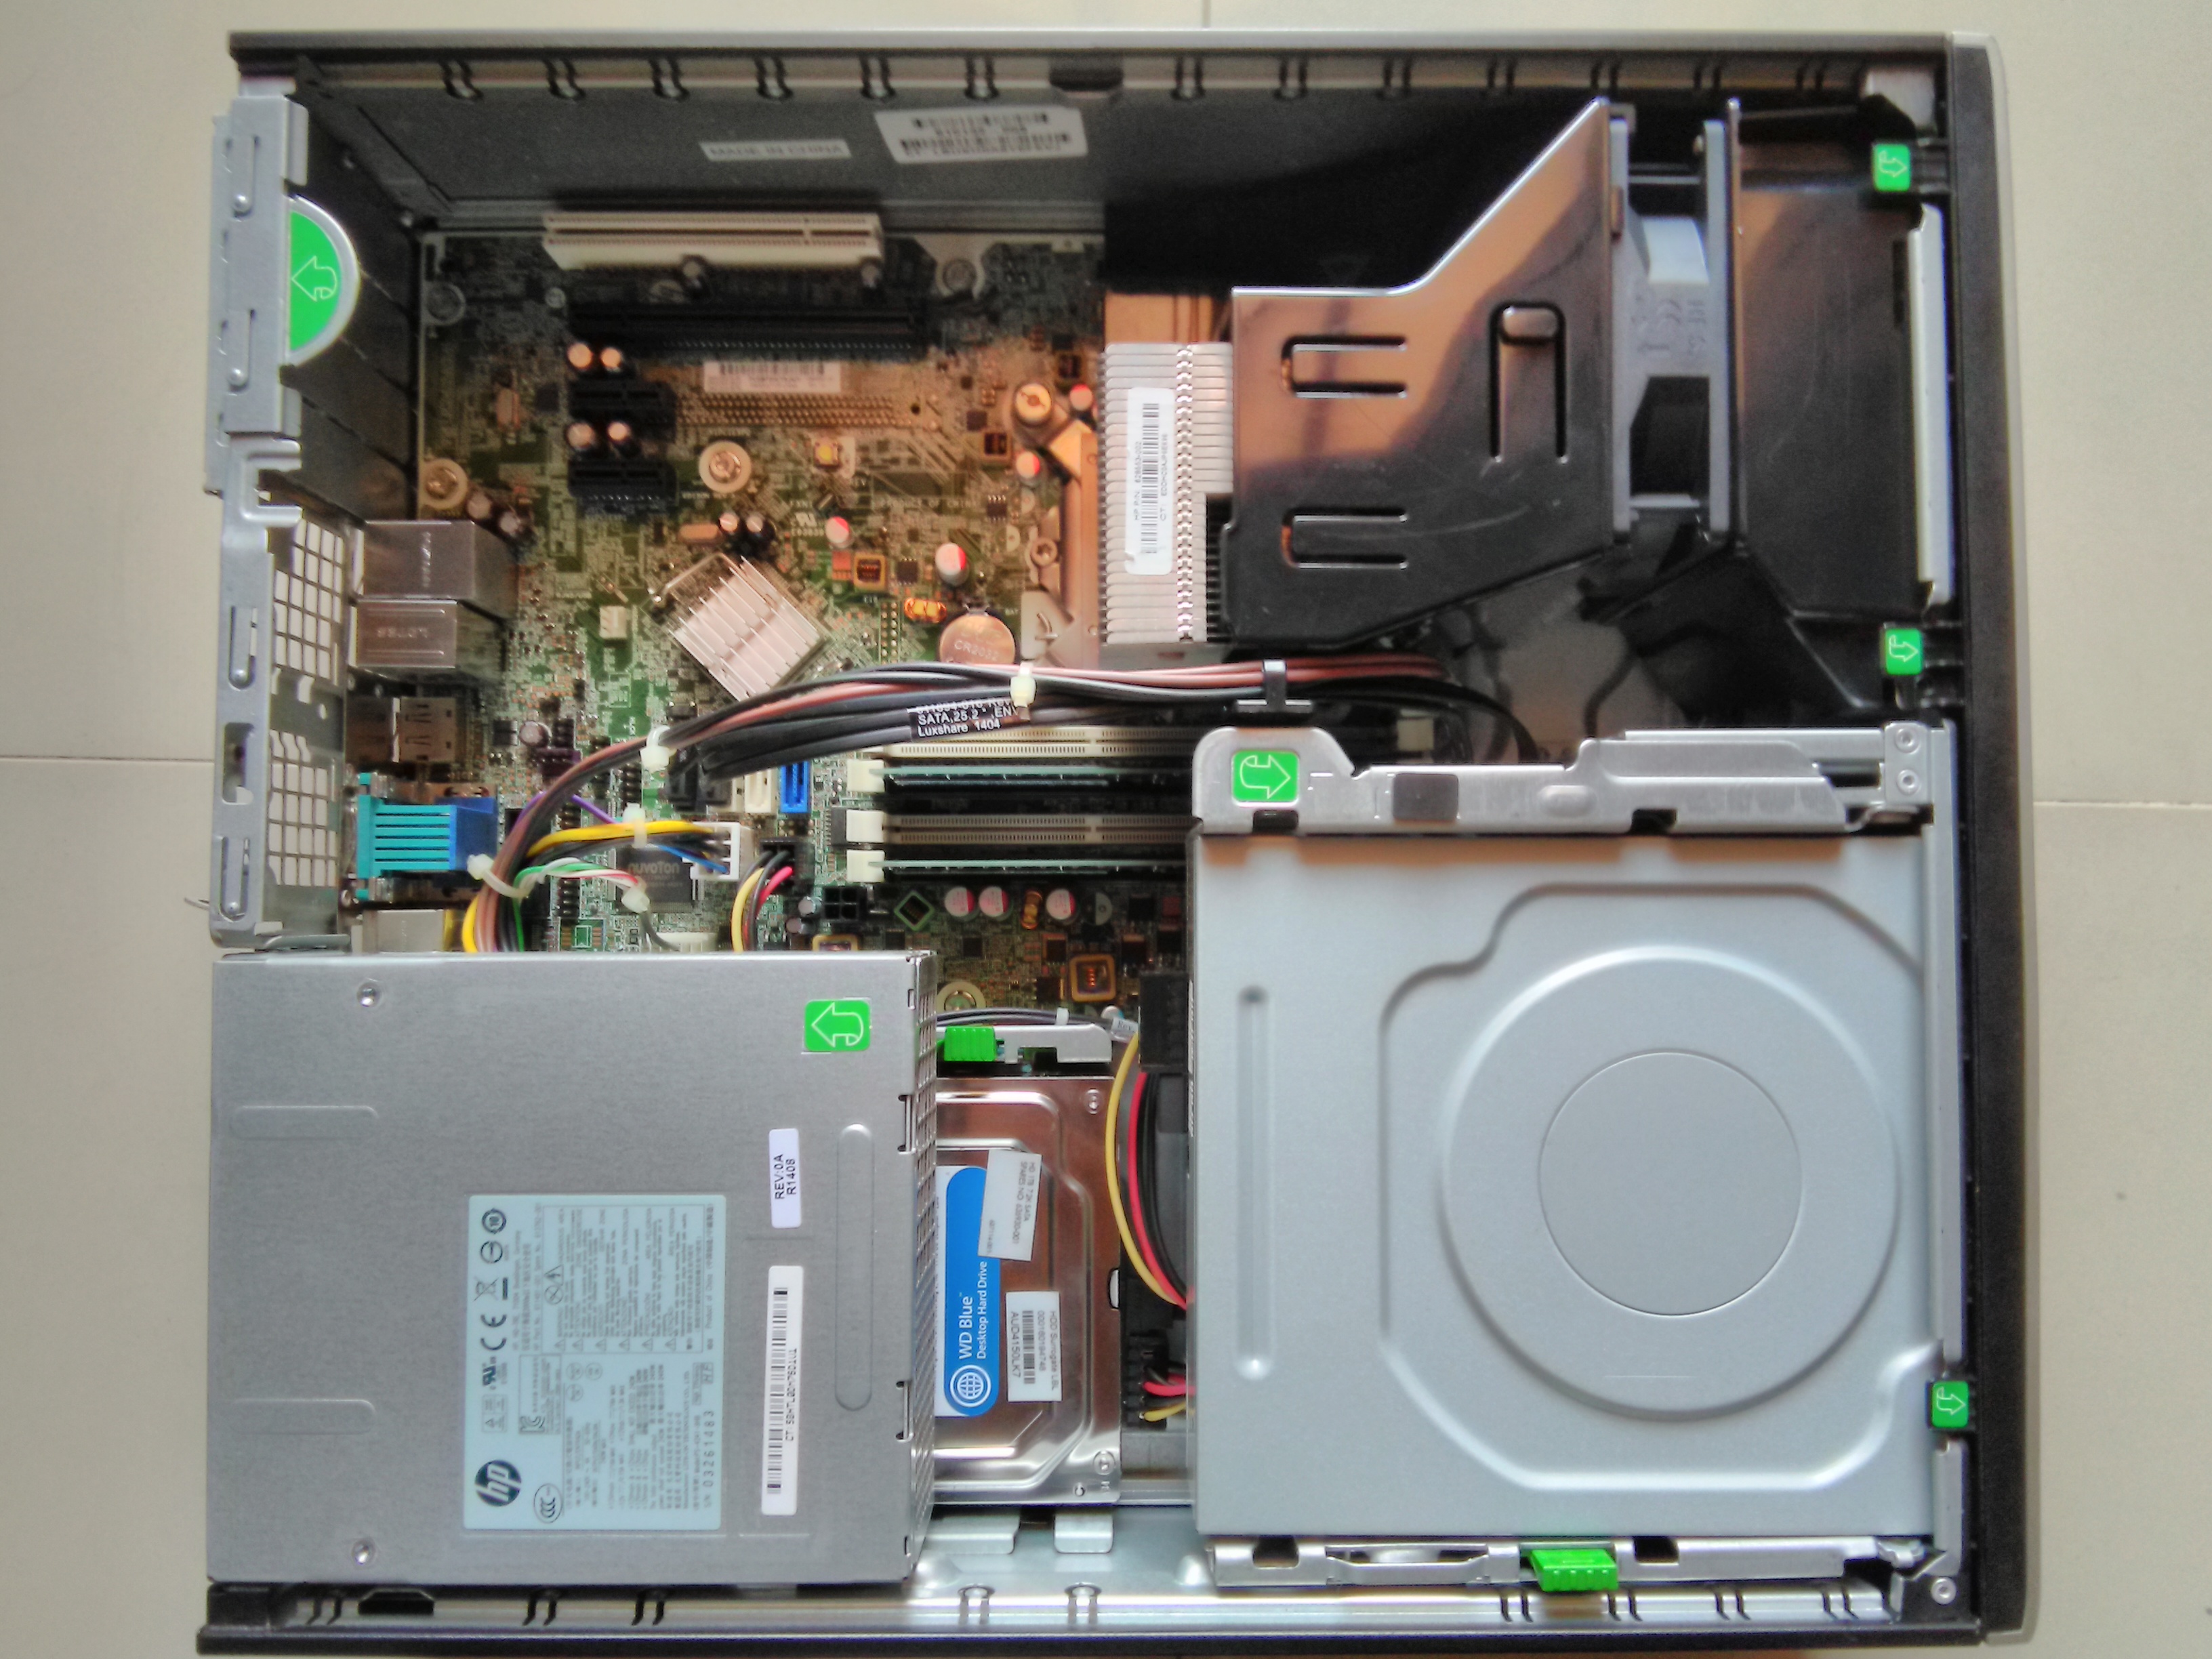 Core i5 3rd Generation Desktop PC